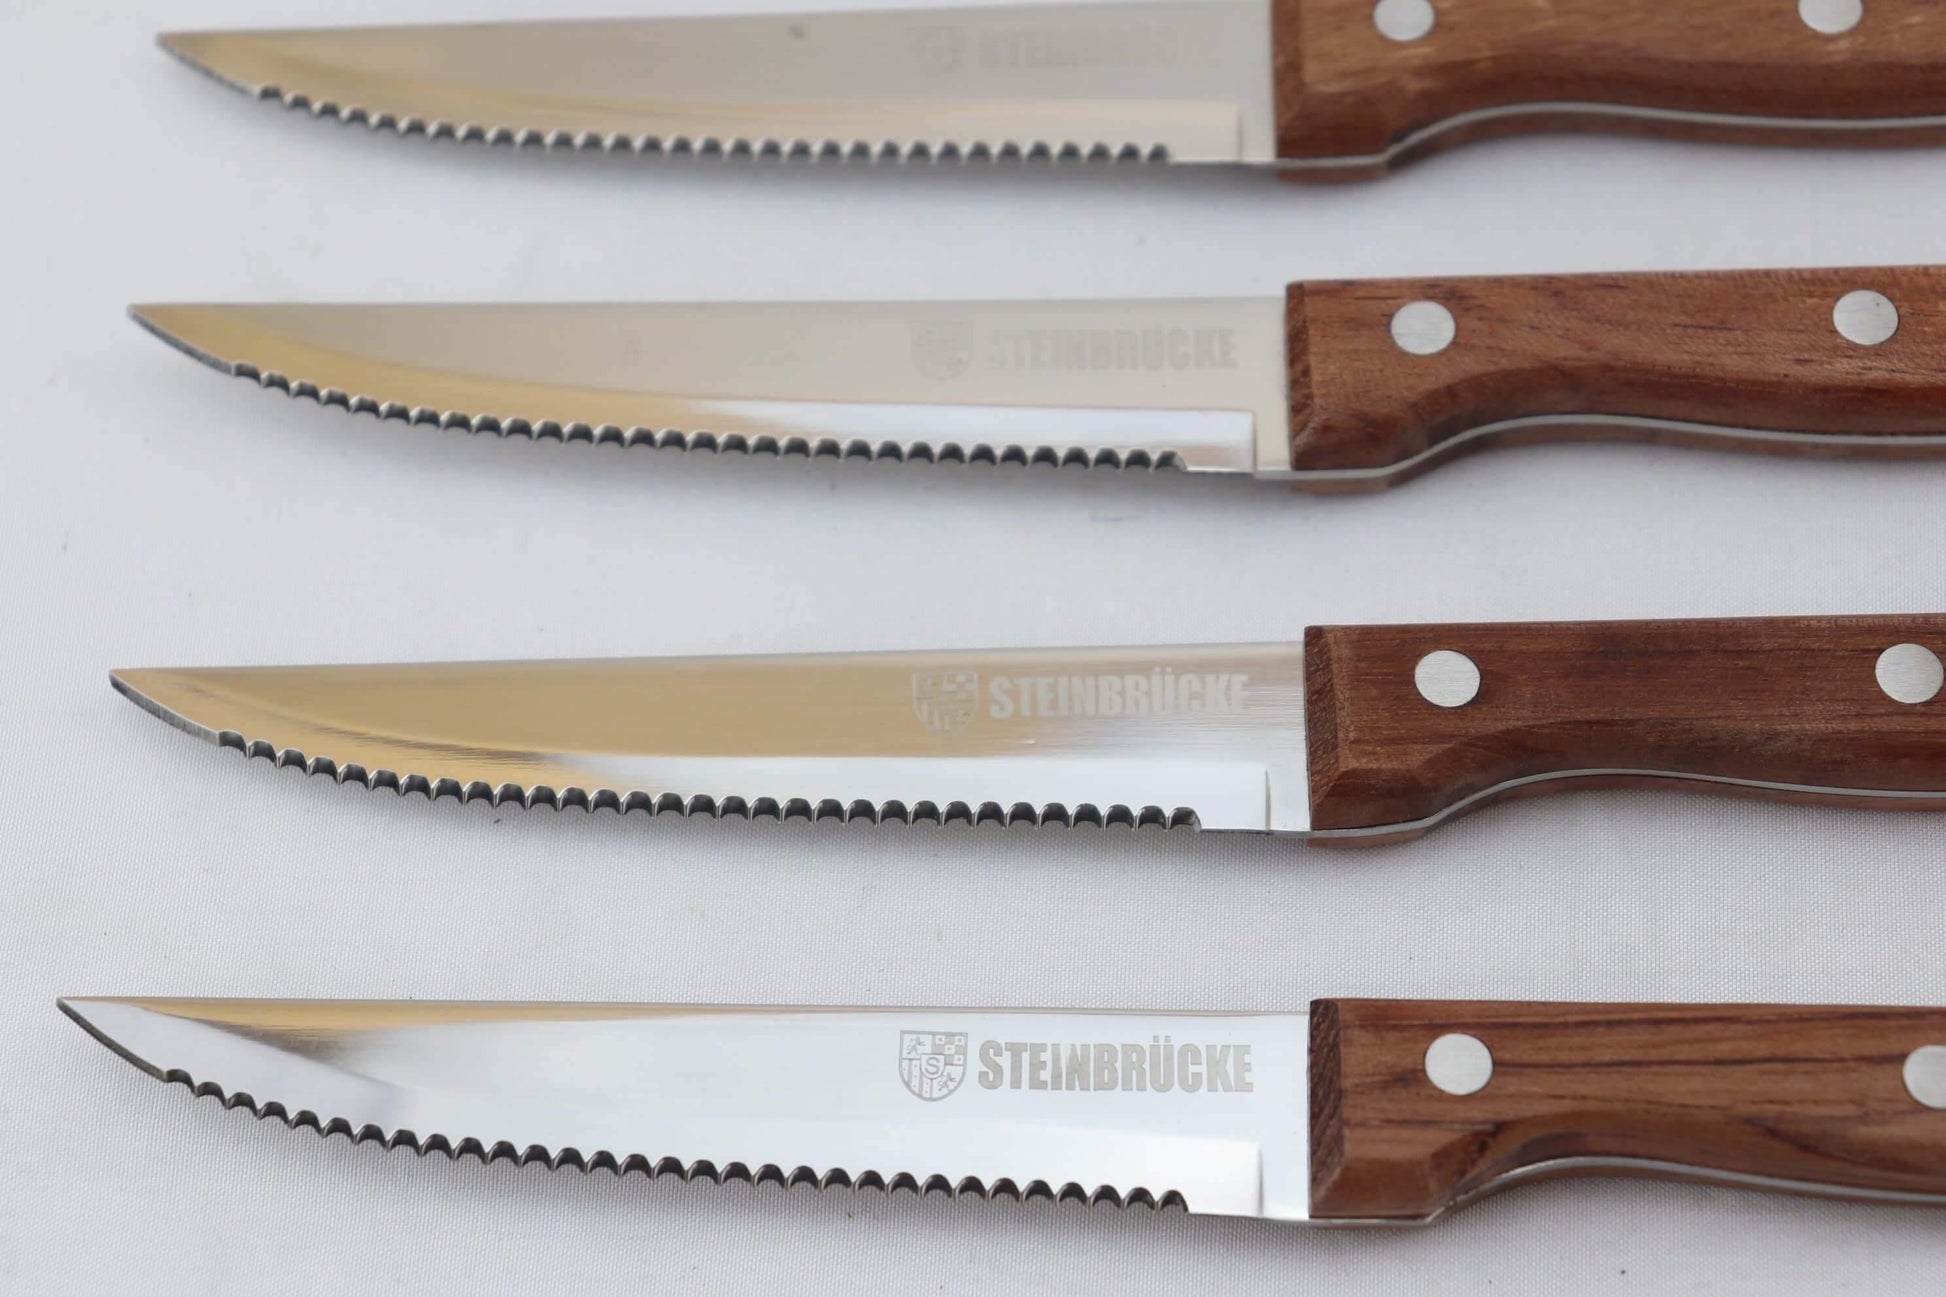 STEINBRÜCKE Steak Knife, 8 pcs - Verrosa Retail Inc.